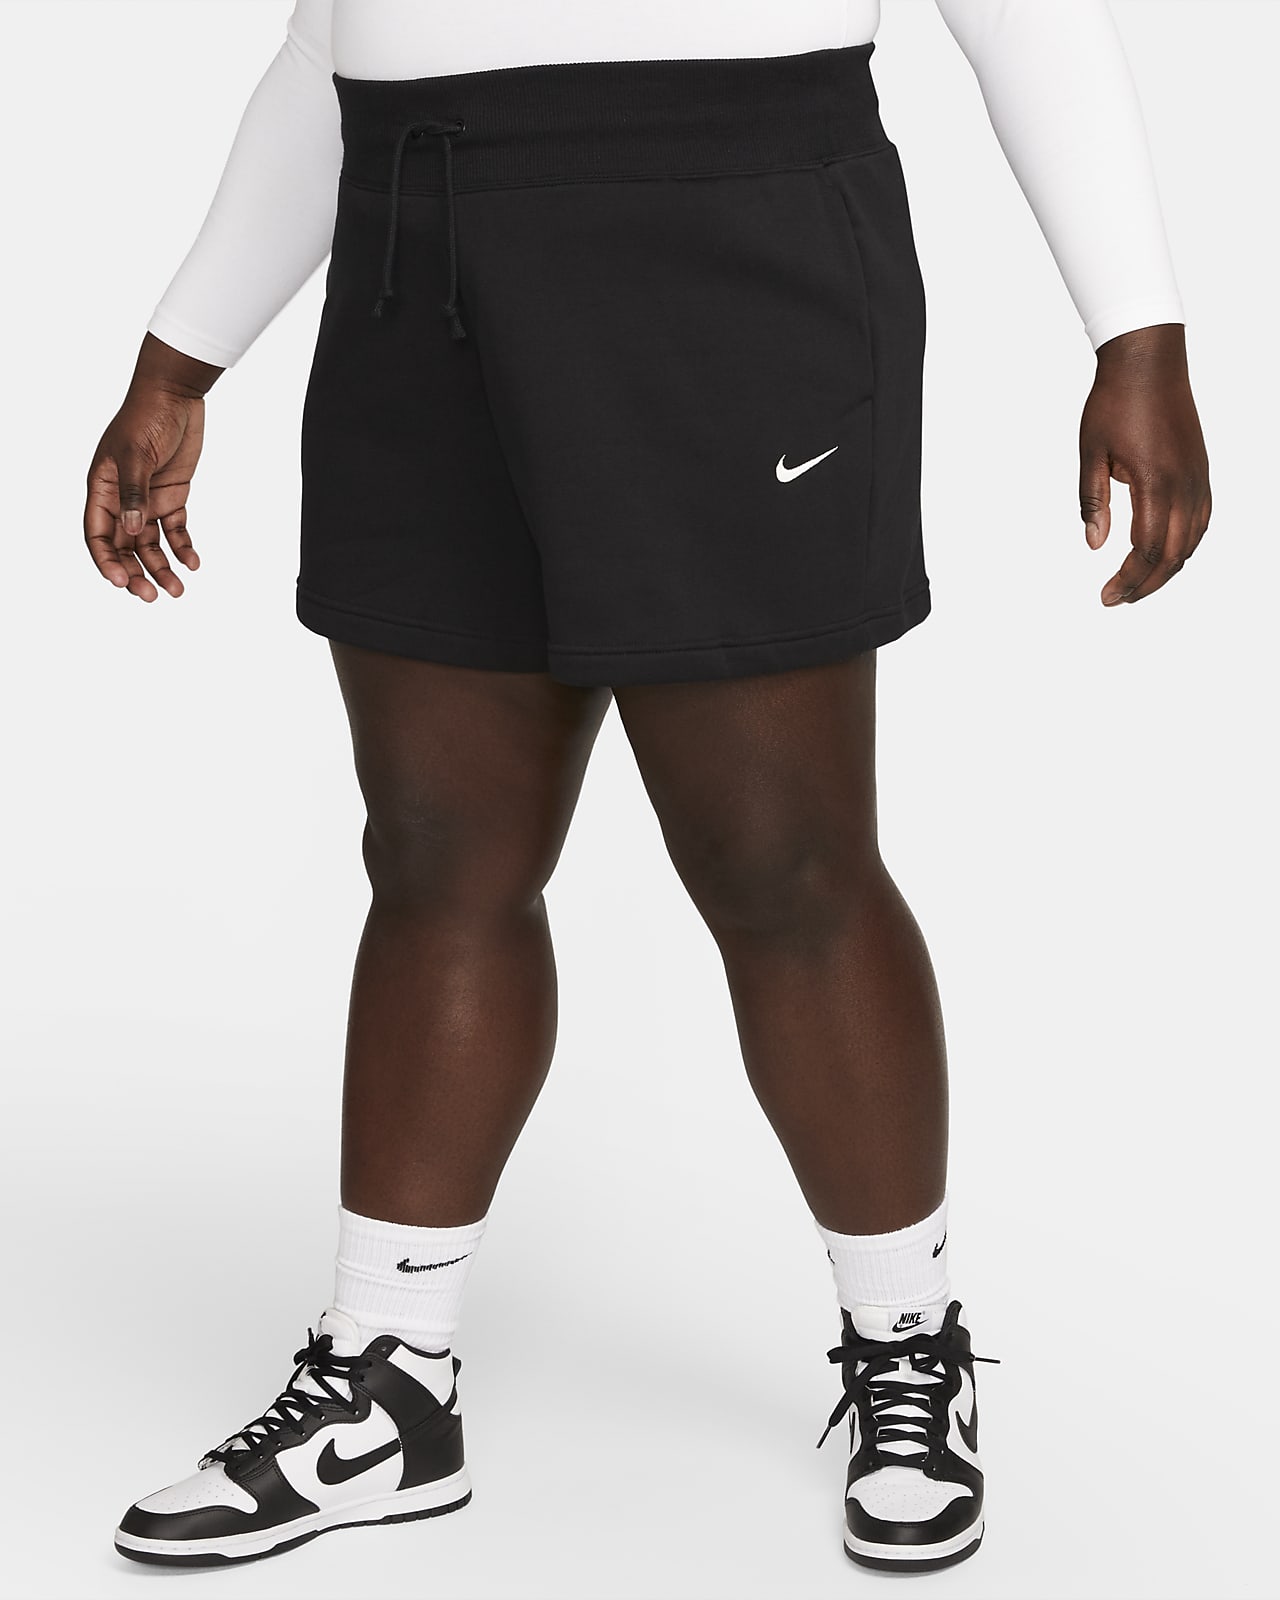 Nike Sportswear Phoenix Fleece Pantalons curts amples i de cintura alta (Talles grans) - Dona